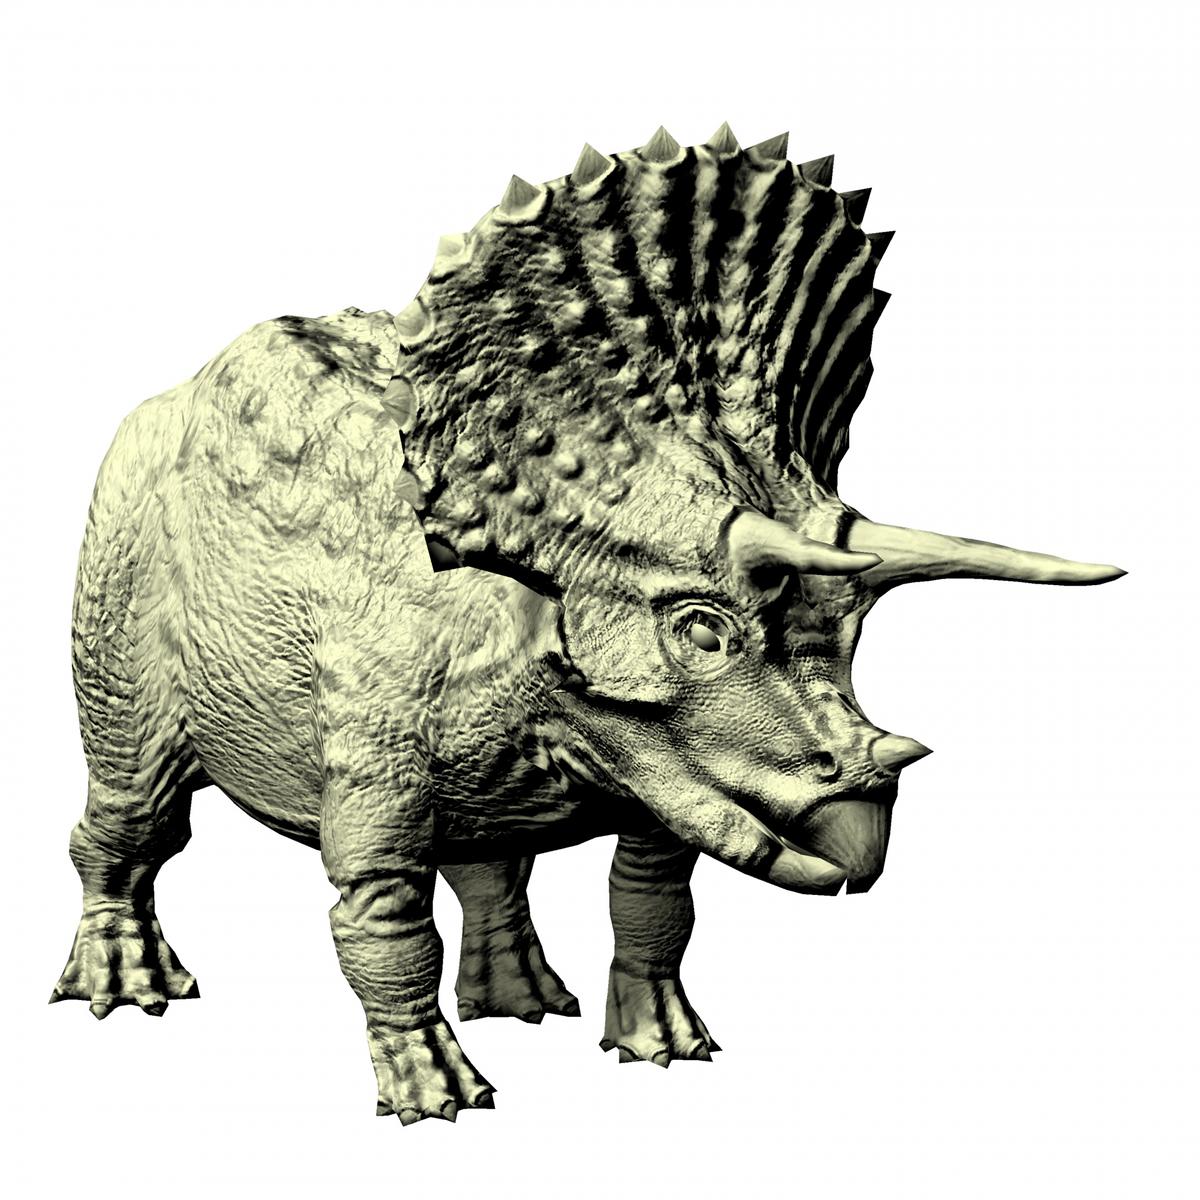 Illustration - Public Domain Pictures | <a href="https://www.publicdomainpictures.net/en/view-image.php?image=291568&picture=triceratops-3d-drawing">Piotr Siedlecki</a>